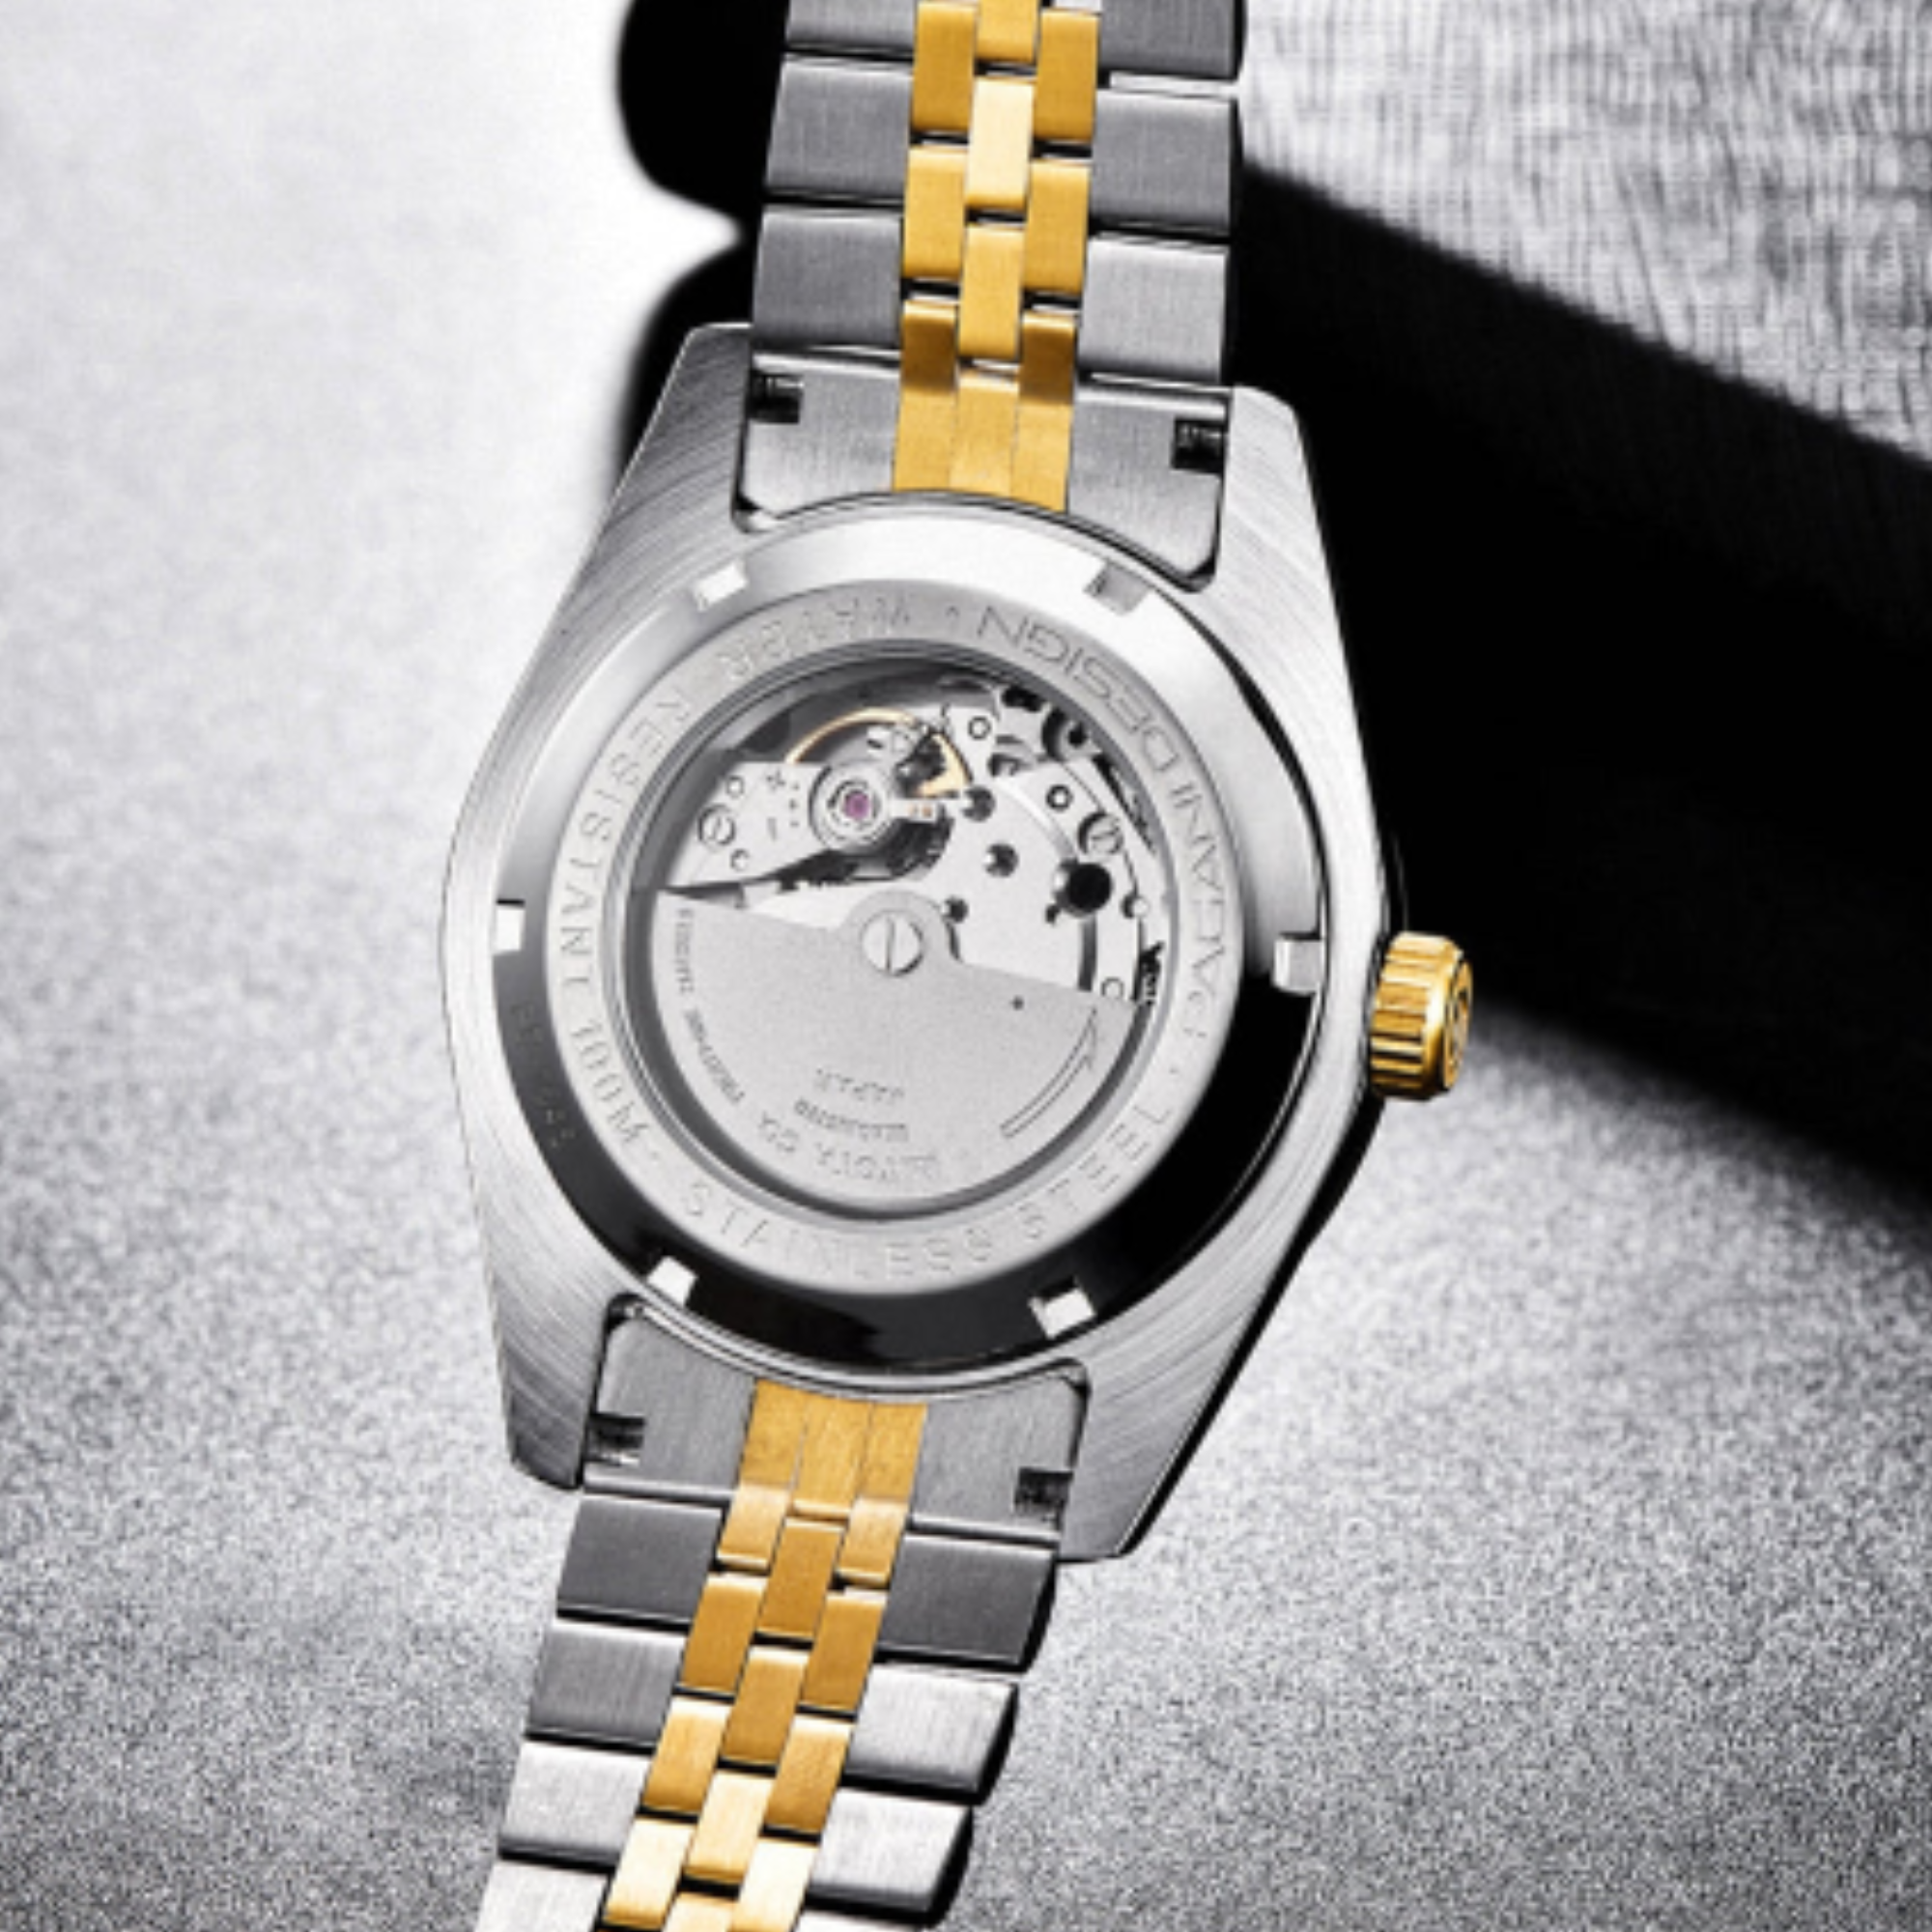 Pagani Design PD-1645 DateJust (Seiko NH-35A Automatic Movement) Mechanical Watch 200M Waterproof Watch Stainless Steel Watch Fluted Bezel (Golden Dial - Jubilee Bracelet)